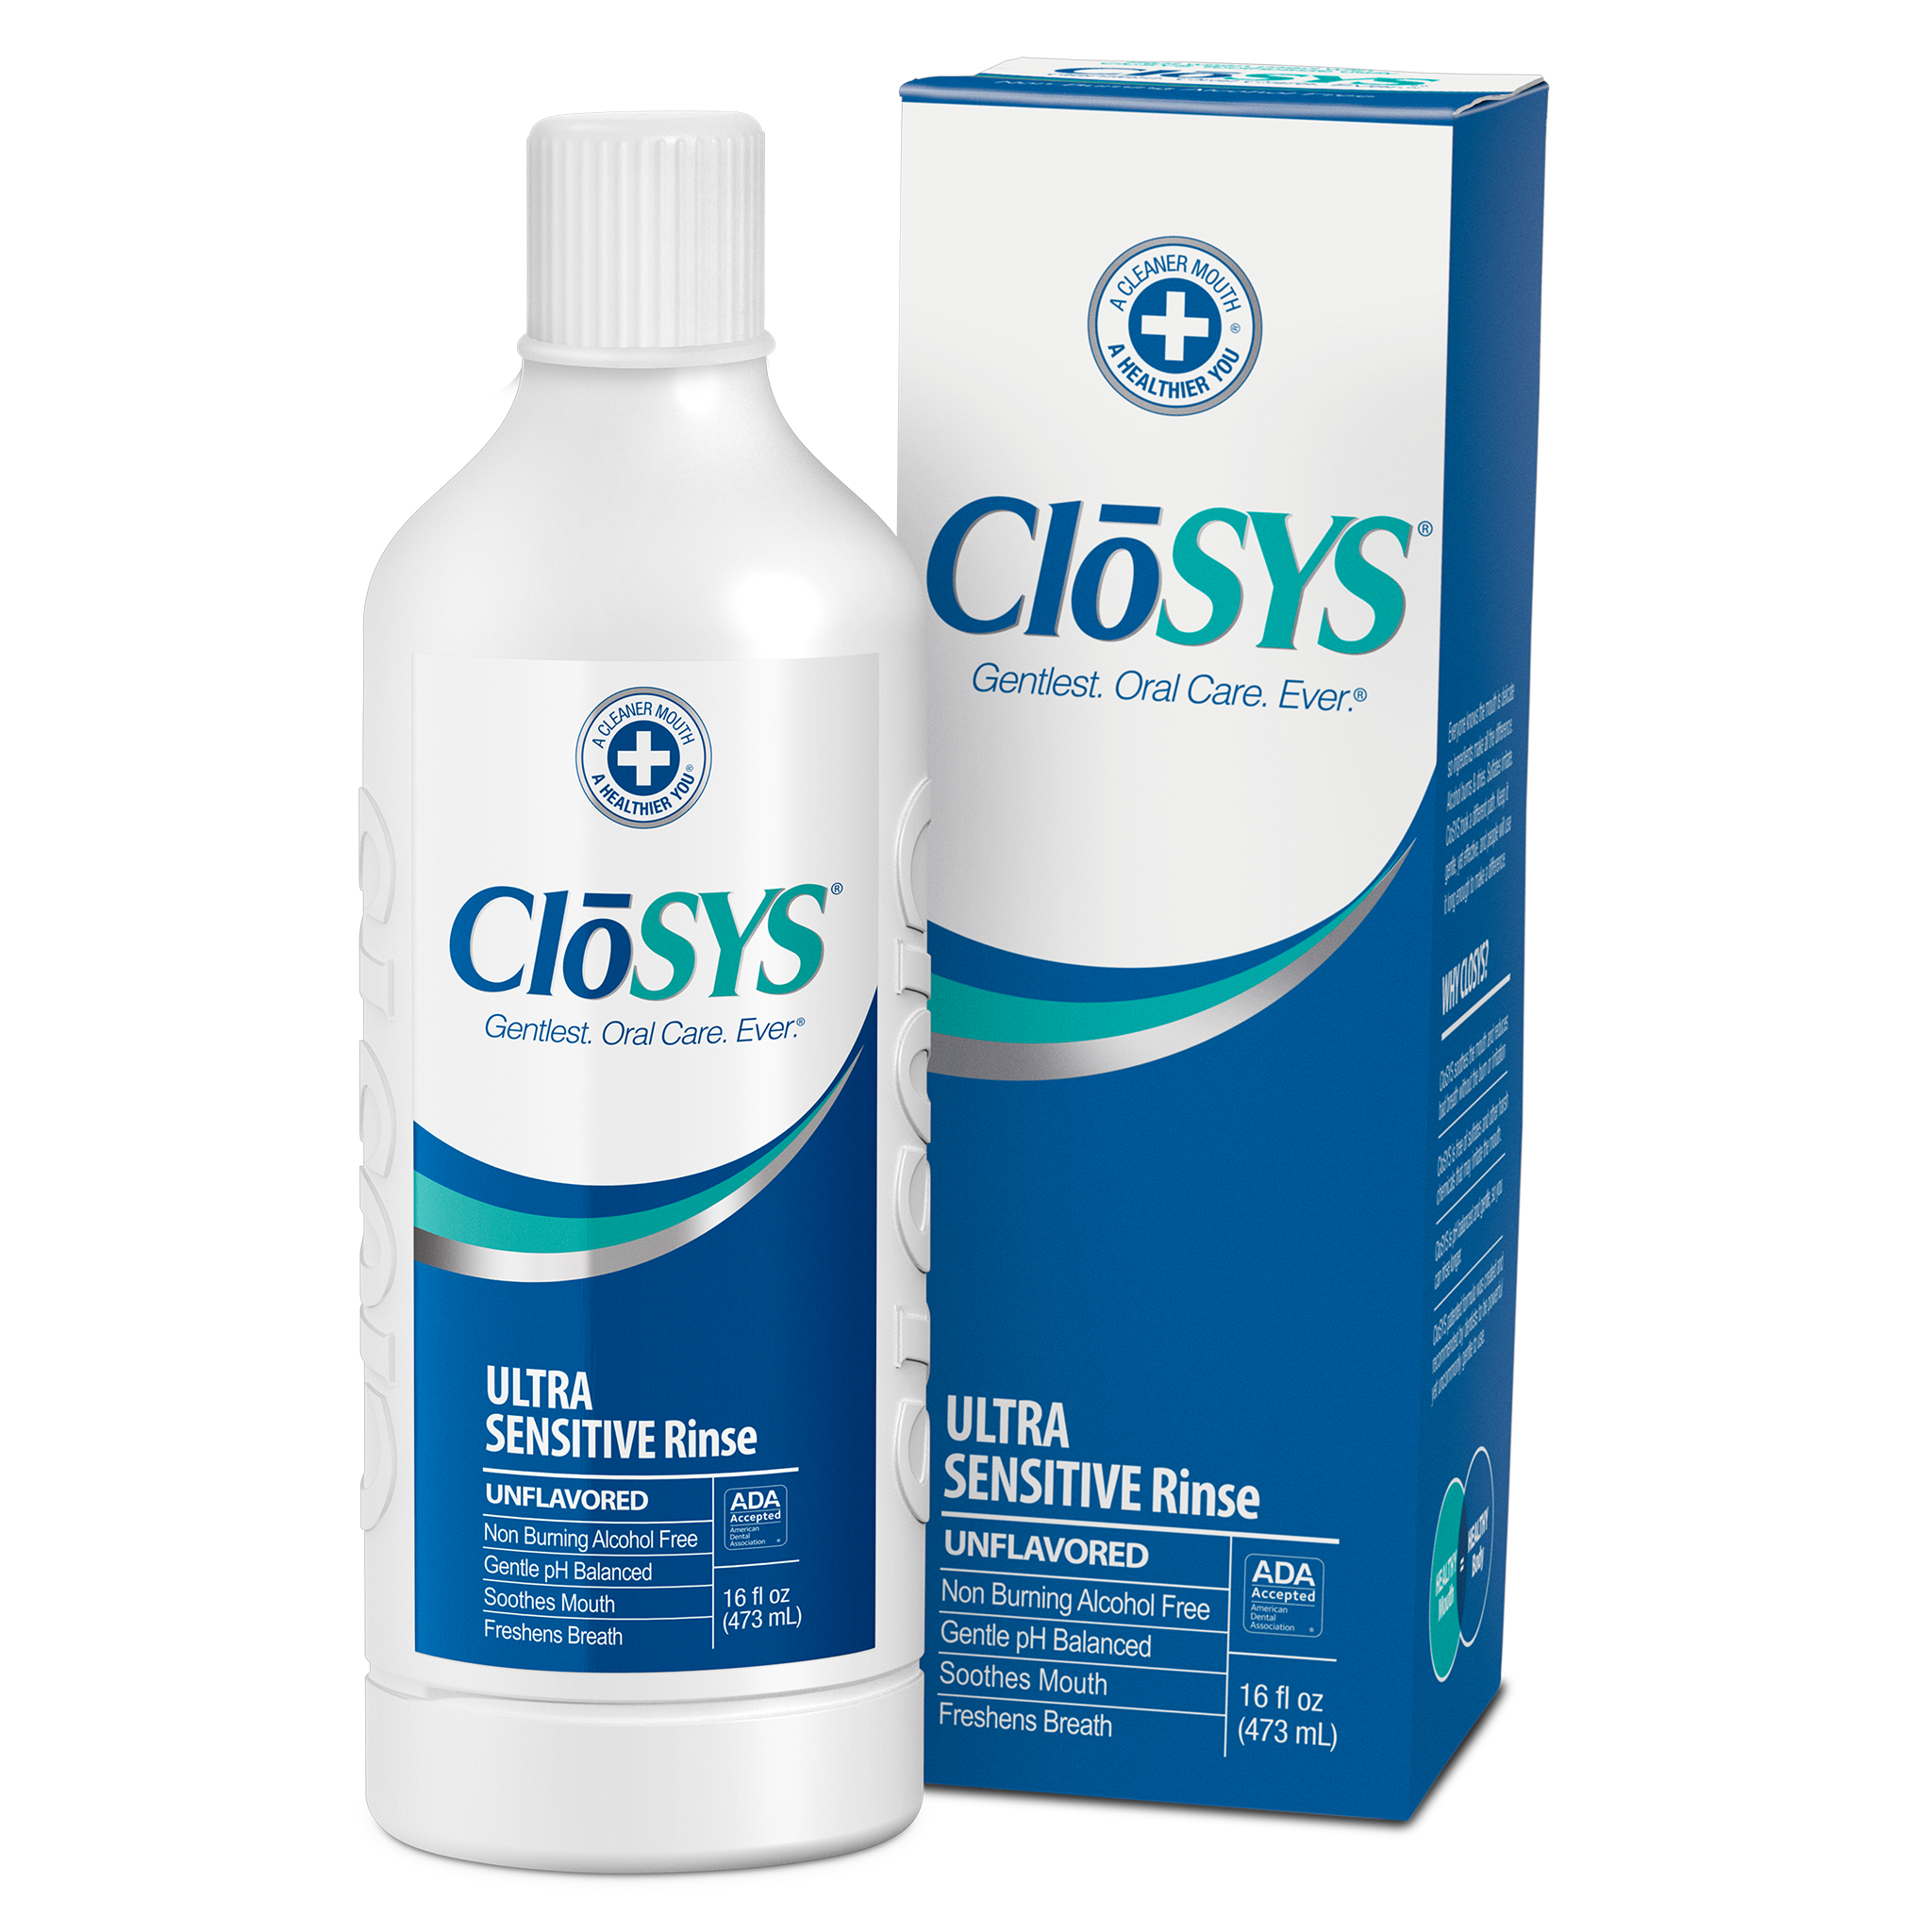 CloSYS Ultra Sensitive Mouthwash